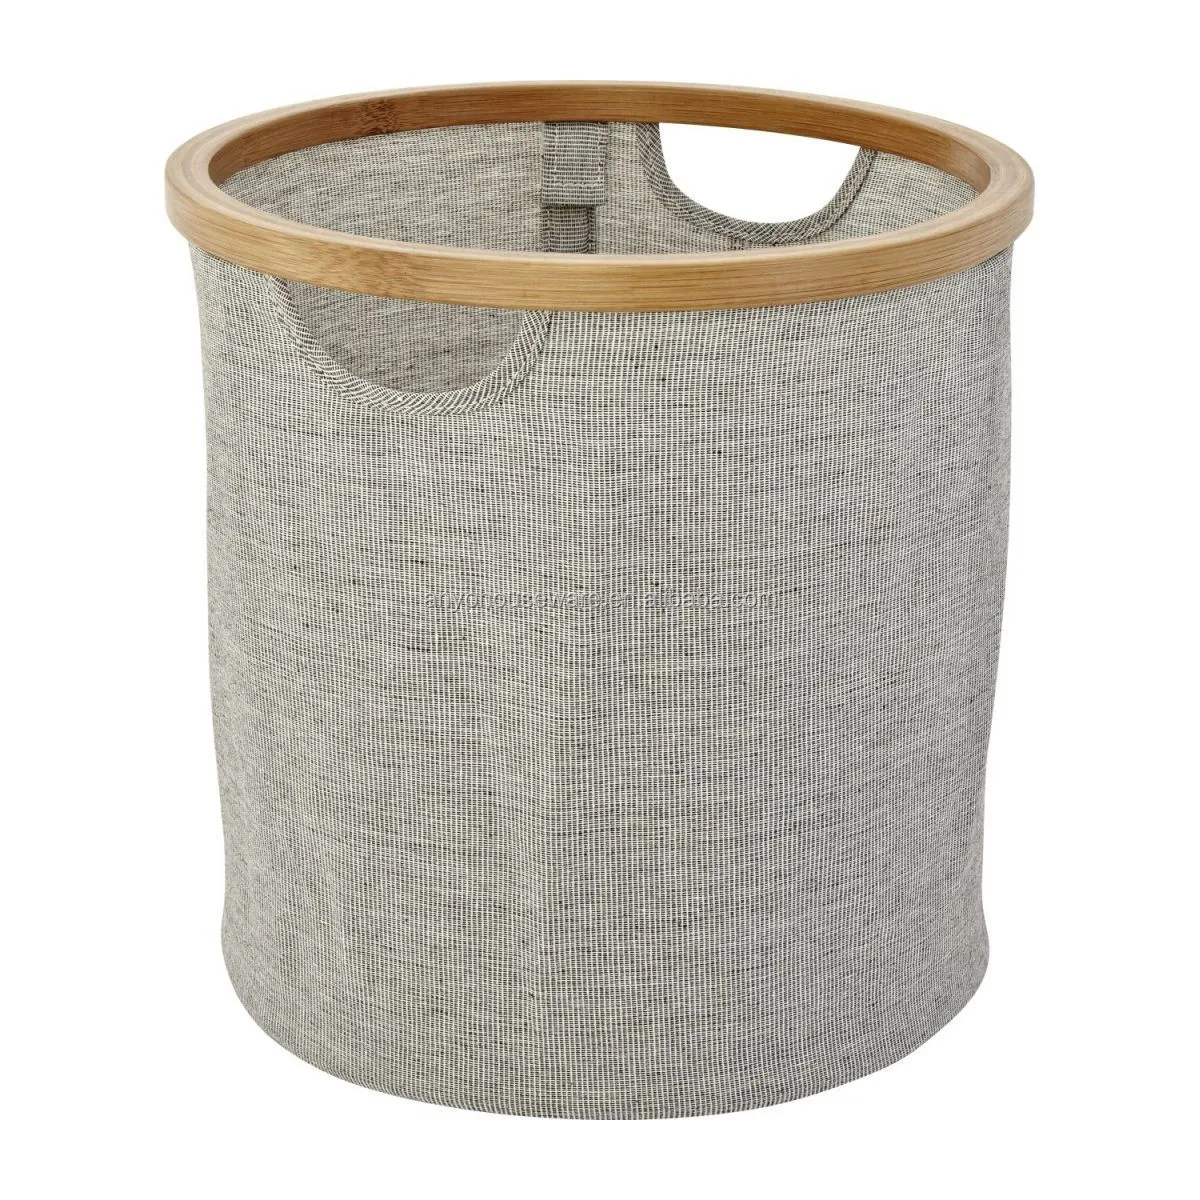 Round Bamboo Frame Foldable Storage Bins Fabric Bathroom Laundry Basket